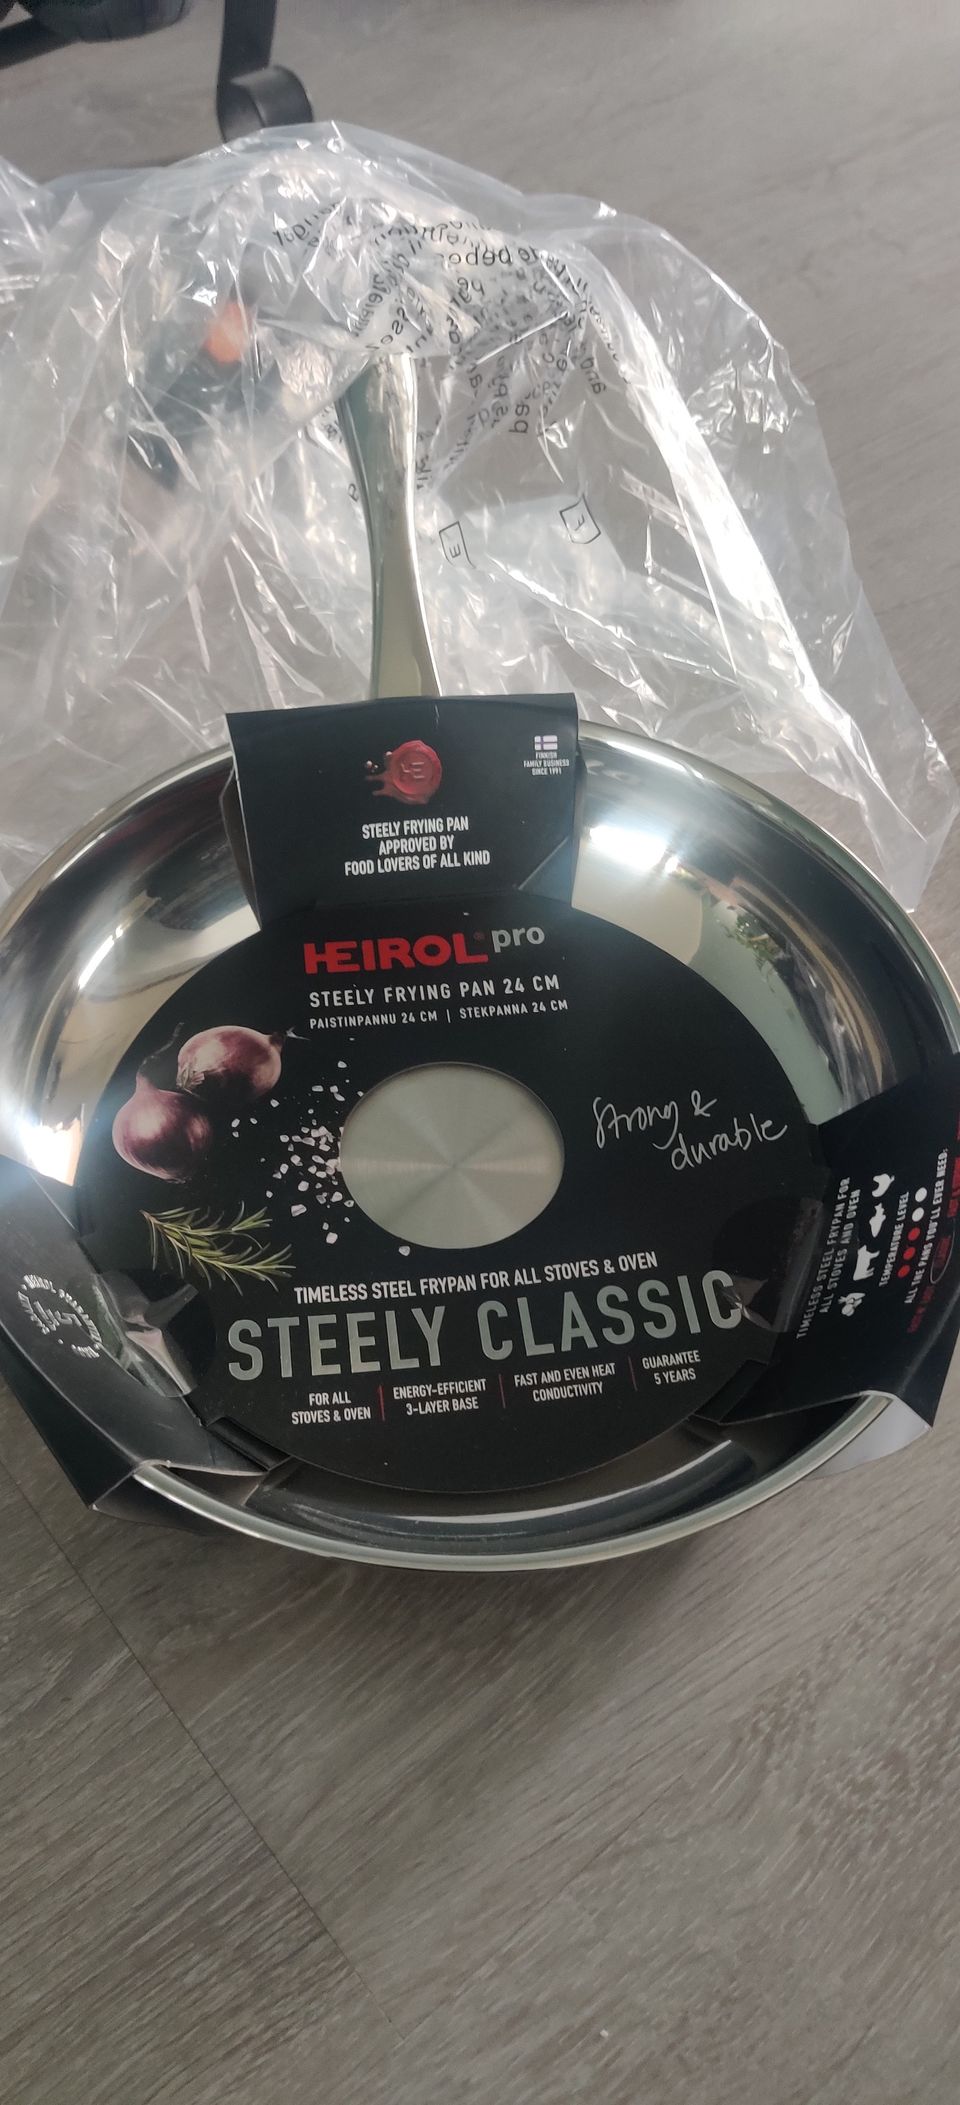 Heirol pro steel classic 24 cm